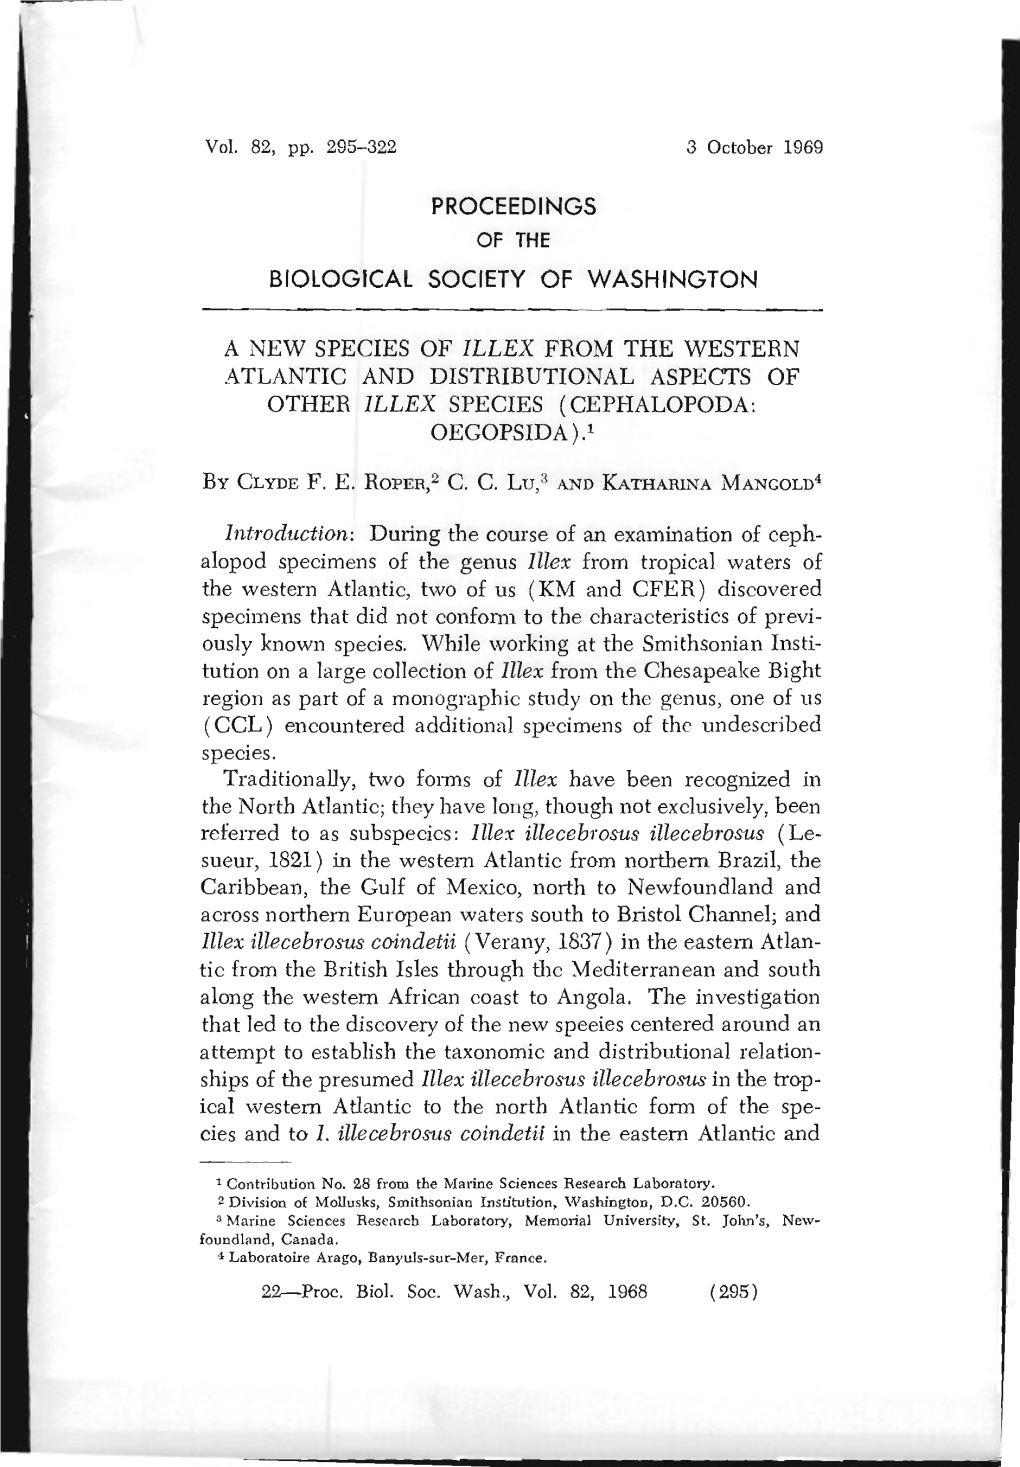 Proceedings Biological Society of Washington